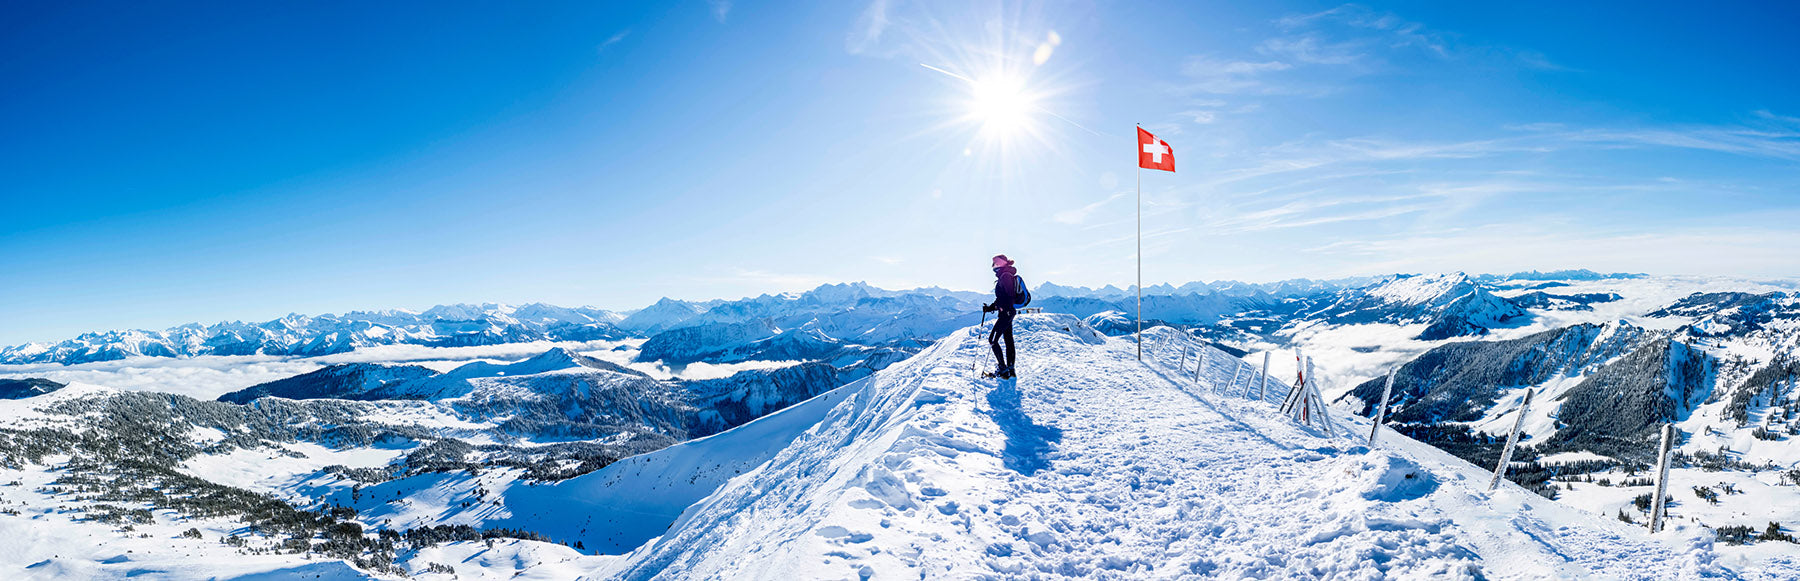 panoramic image of The Swiss alps